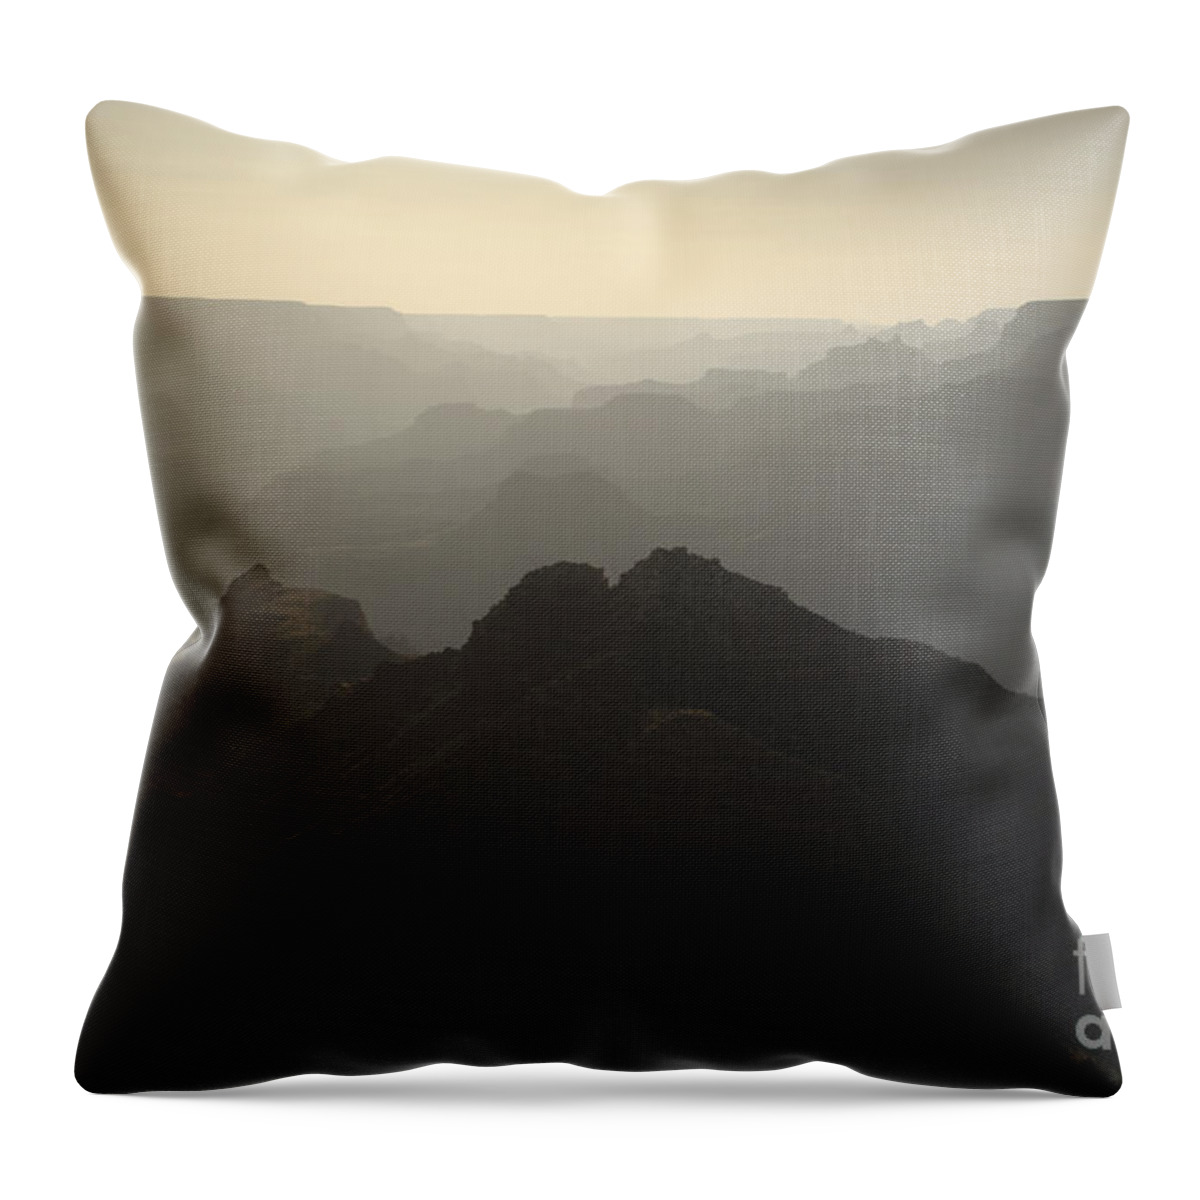 Grand Canyon Throw Pillow featuring the photograph Grand Canyon No. 2 by David Gordon